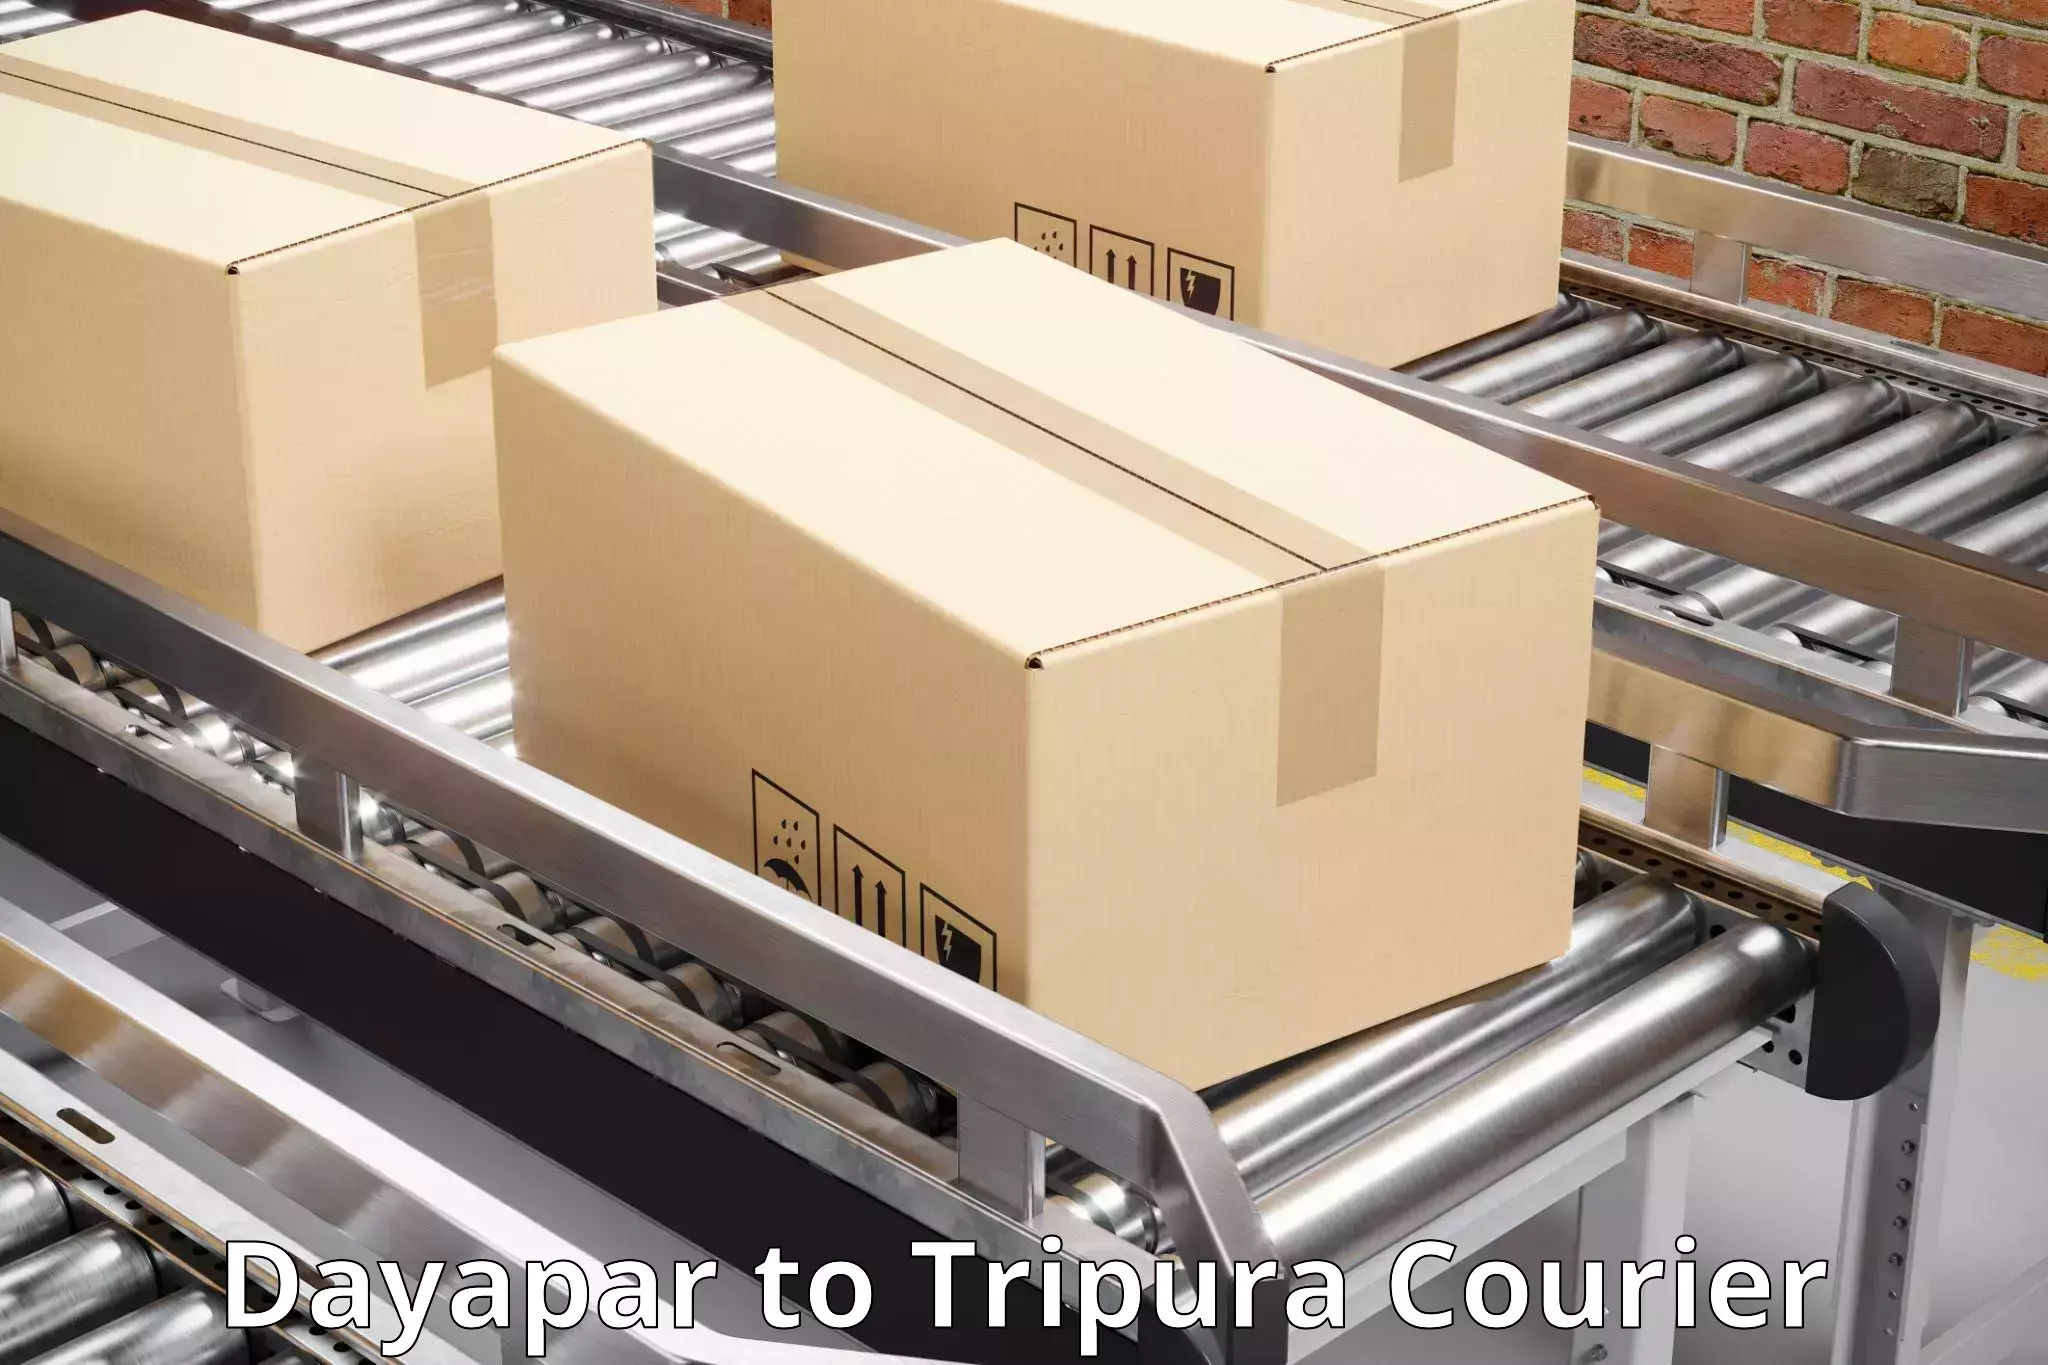 Express delivery network Dayapar to Udaipur Tripura